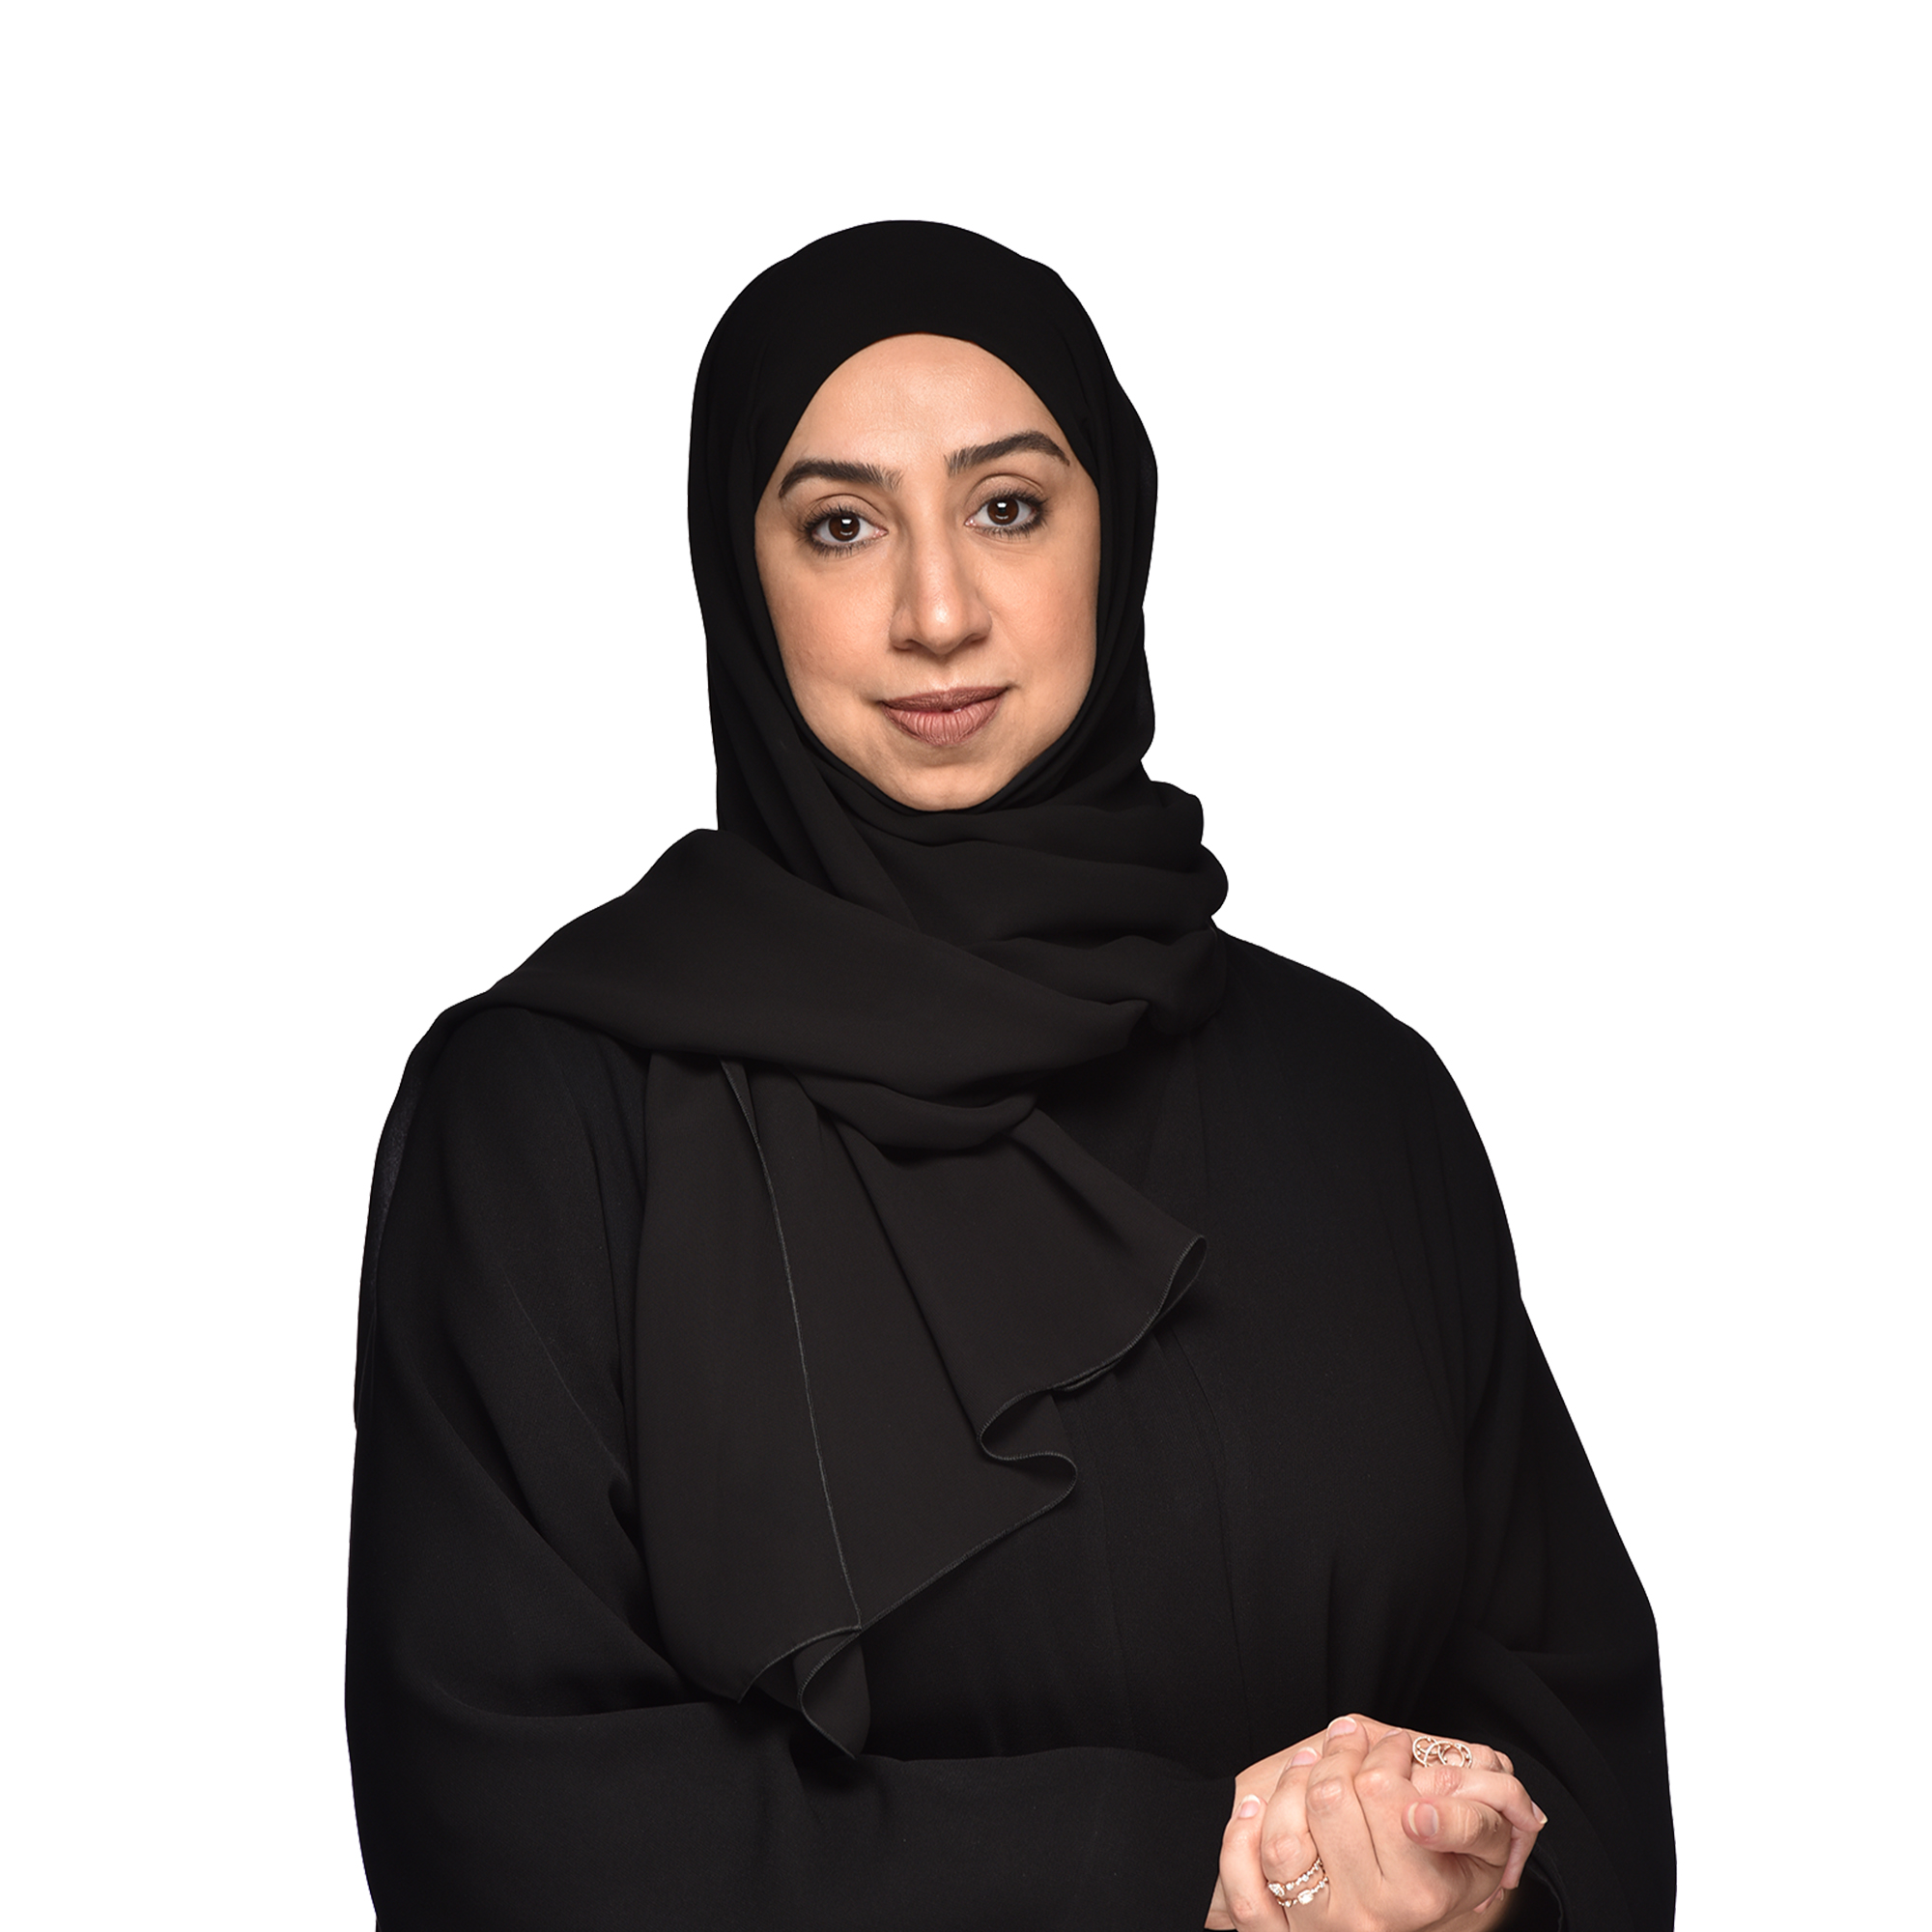 Ms. Mashael Ali Yousef Al Hammadi